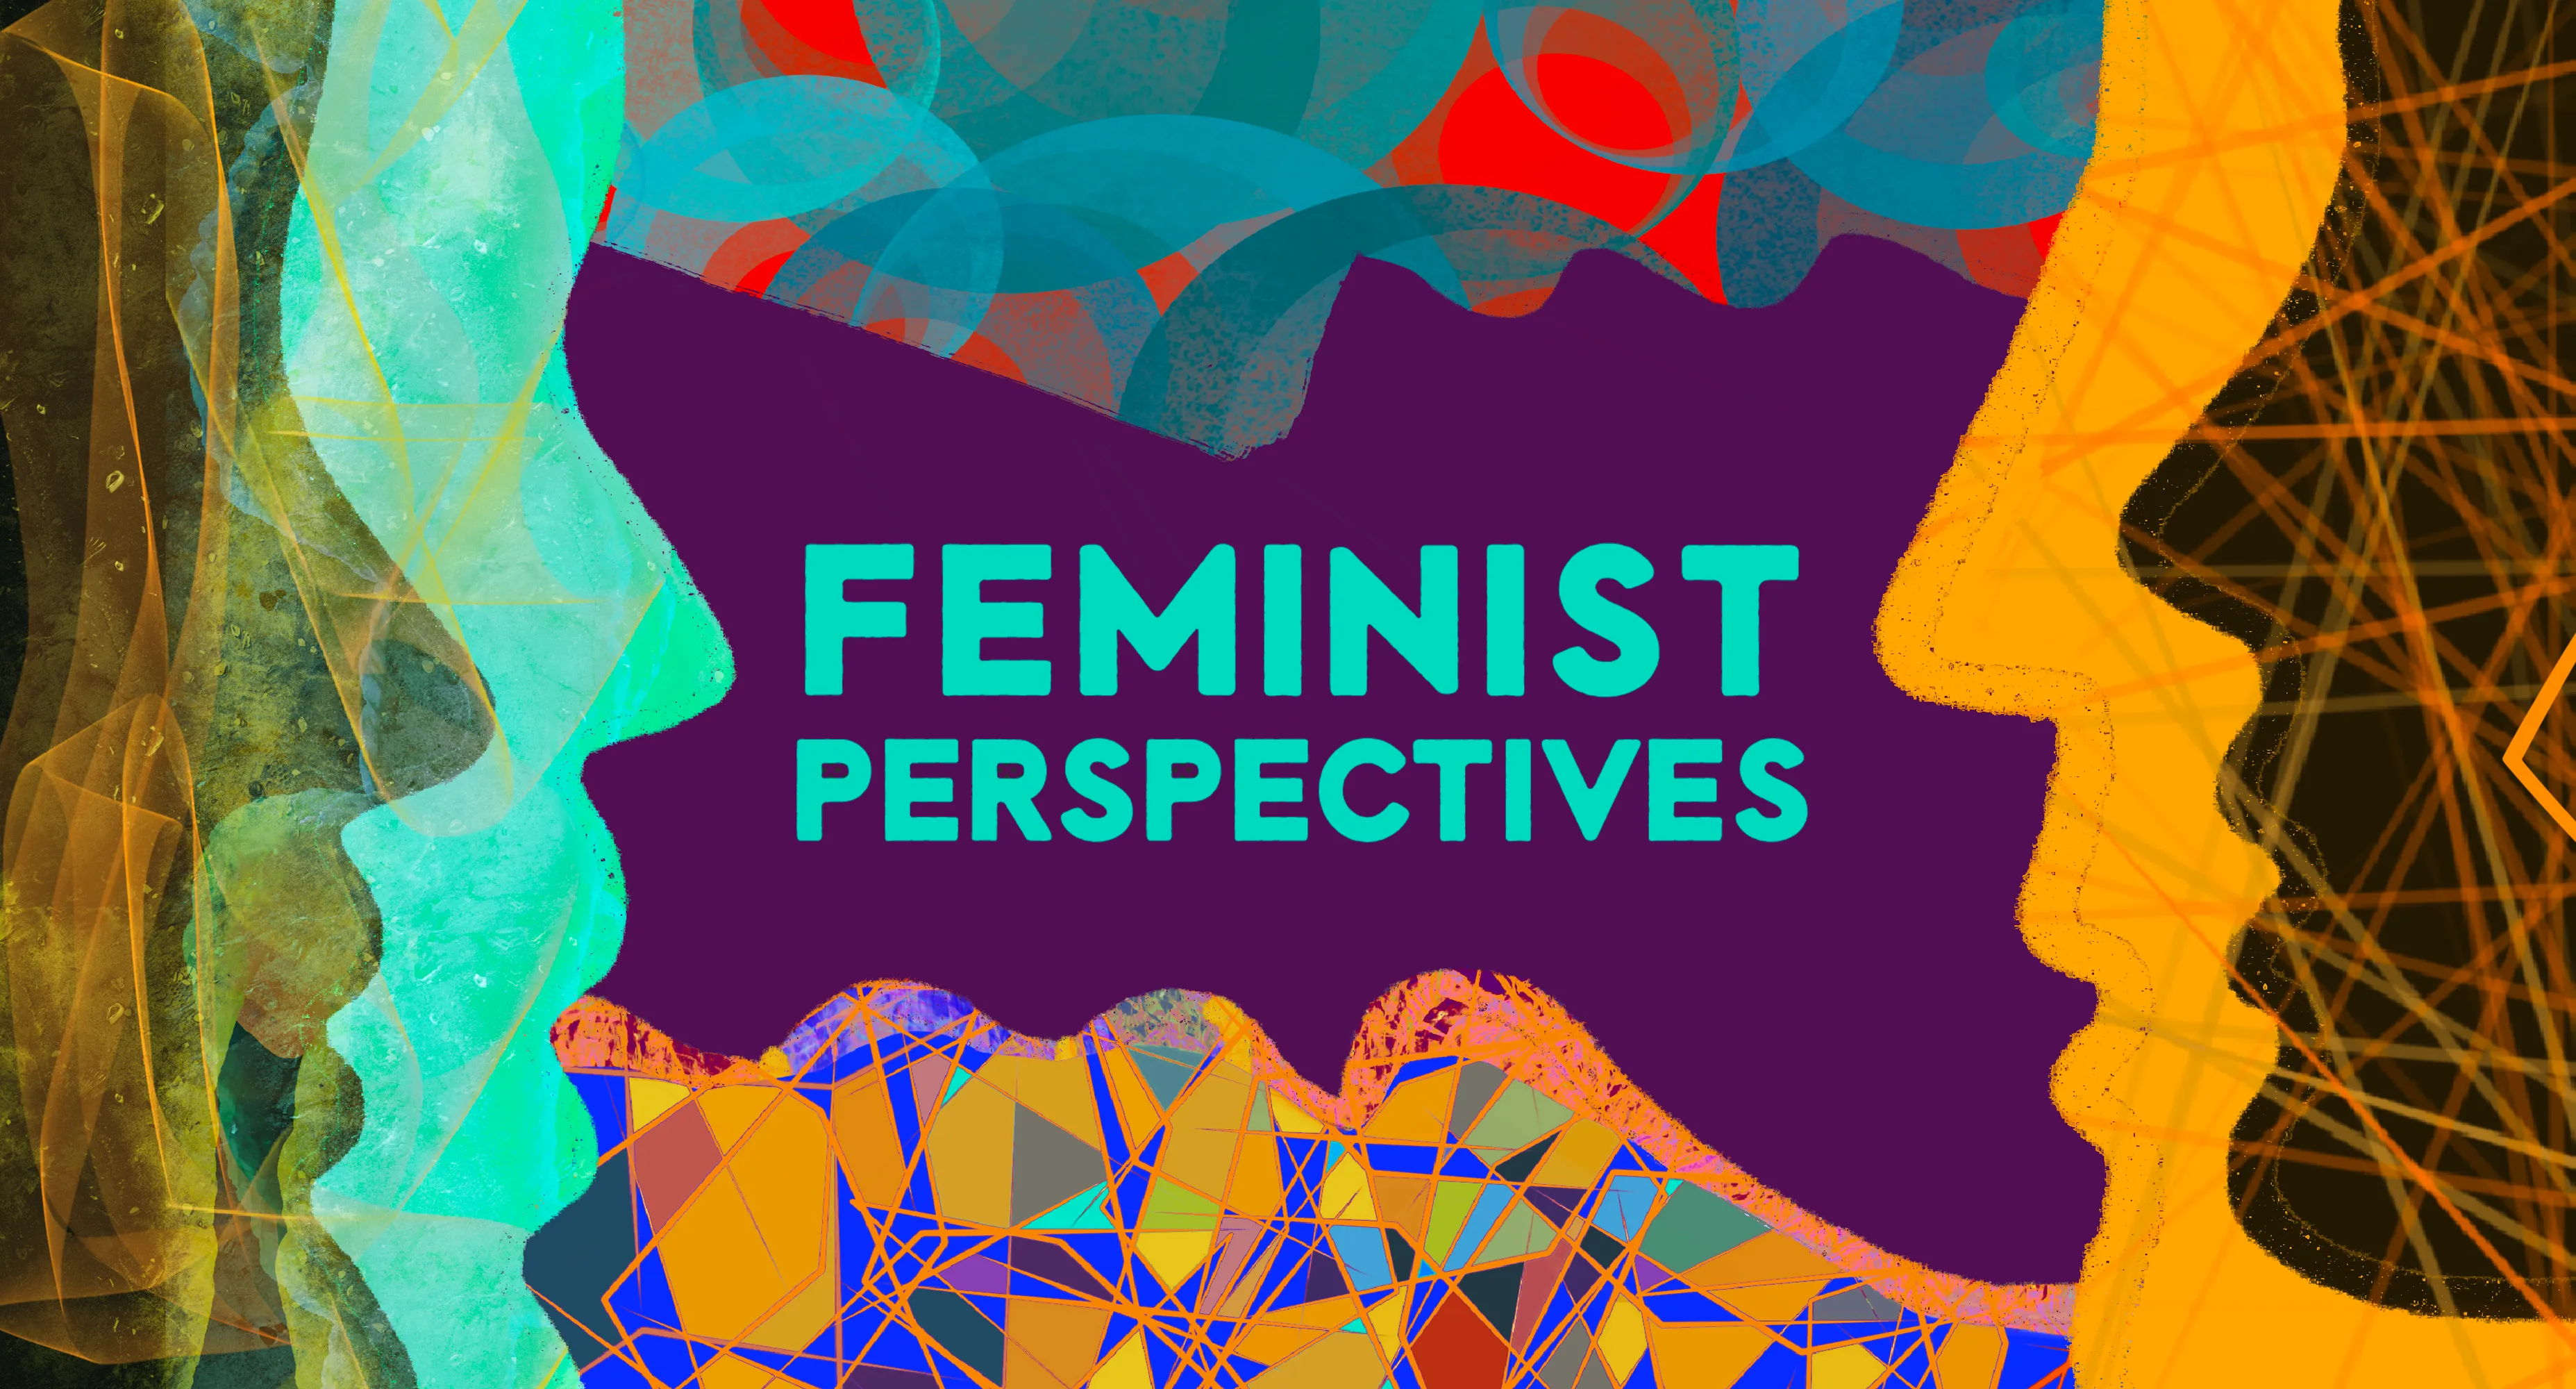 Feminist-perspectives-banner